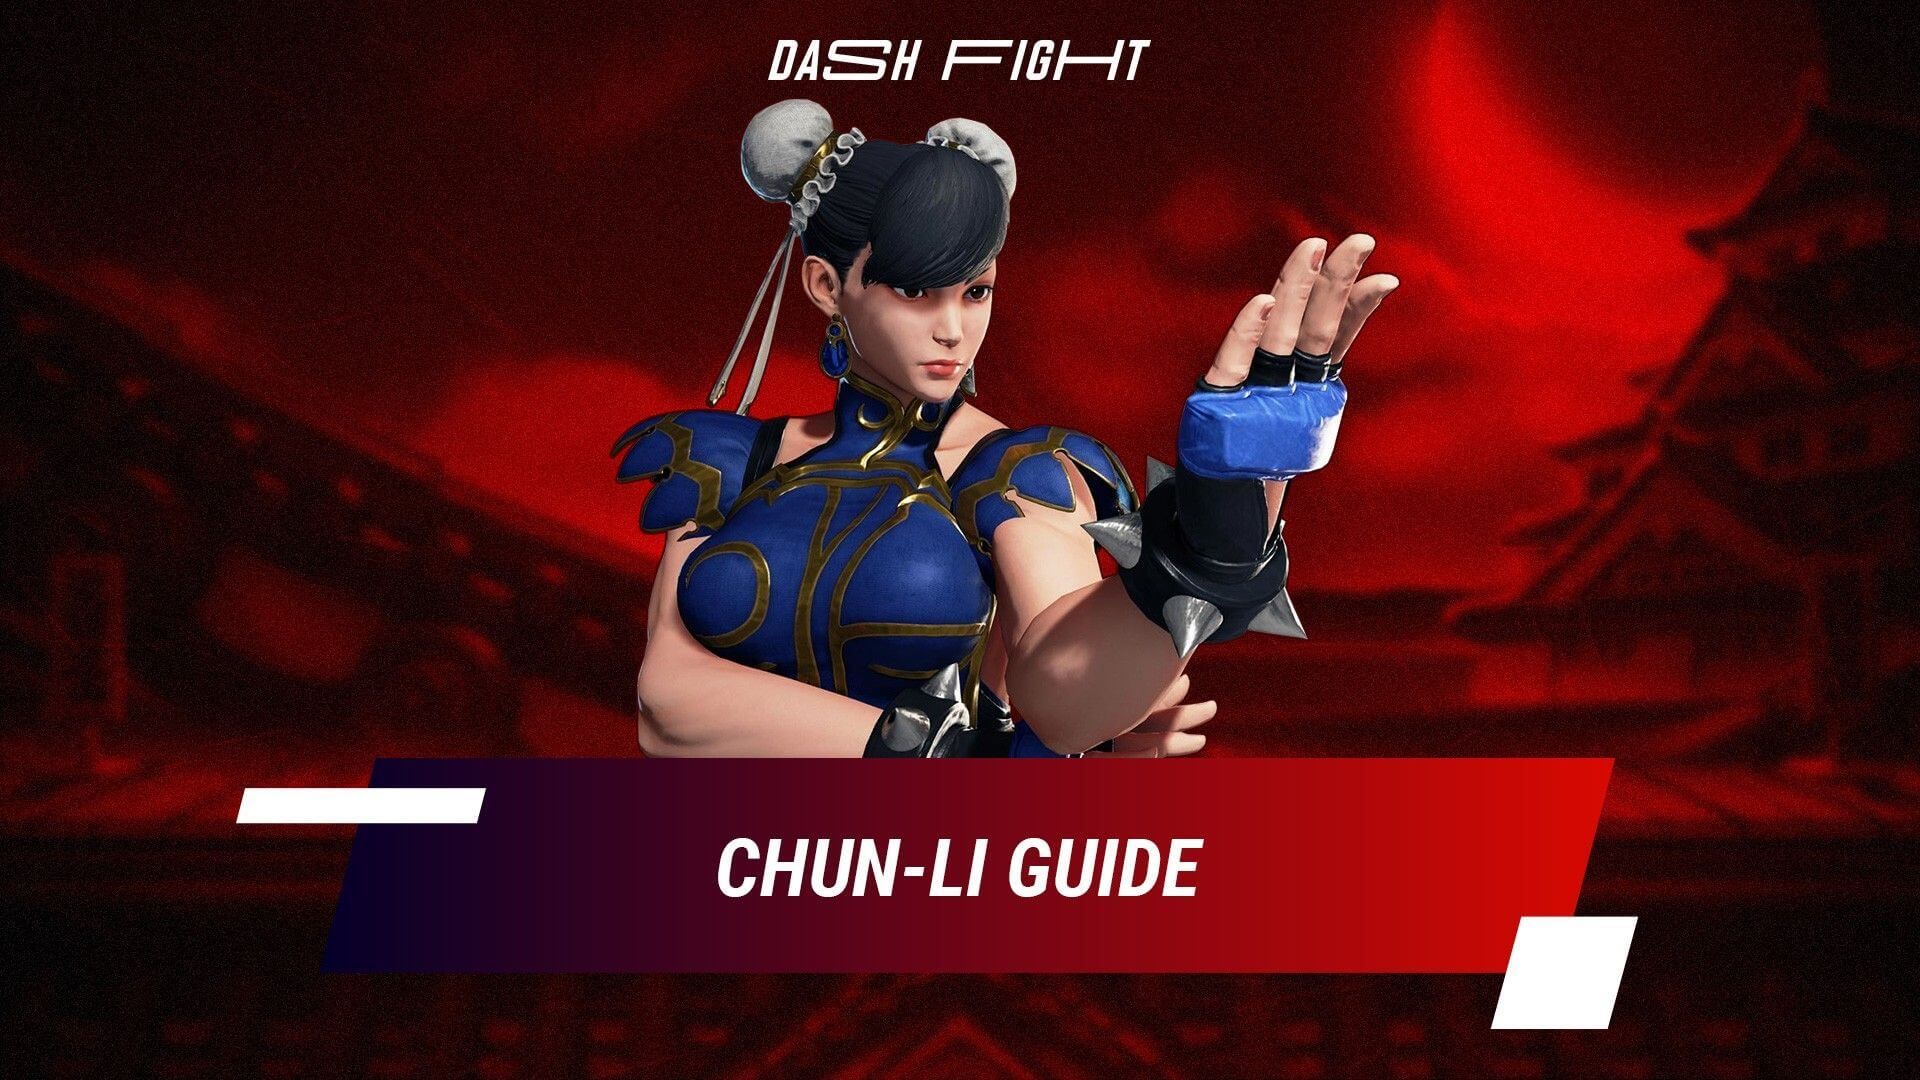 Street Fighter 5 Chun Li Guide Combos And Move List Dashfight